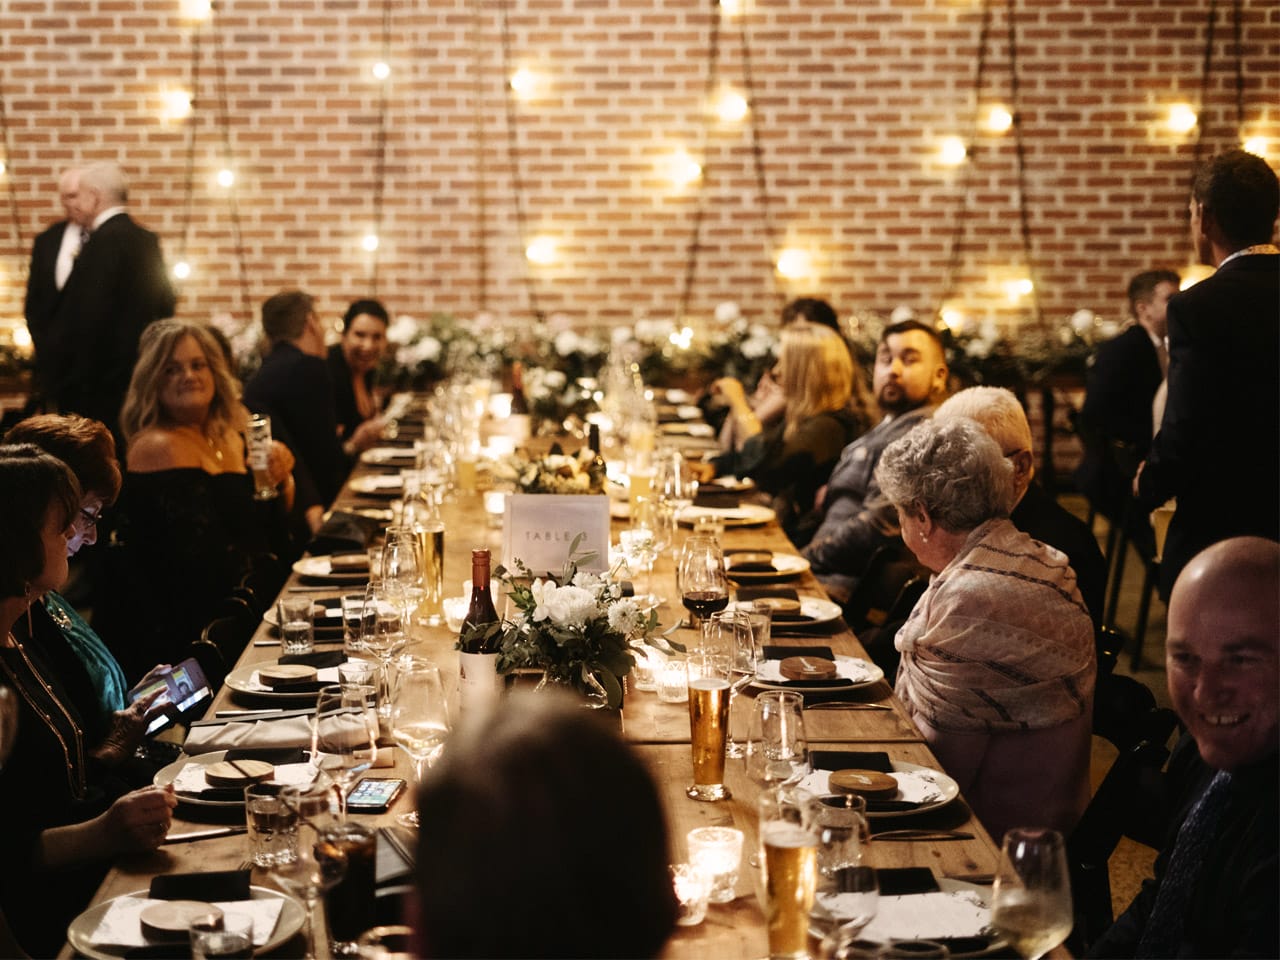 Guests at long tables enjoying a function